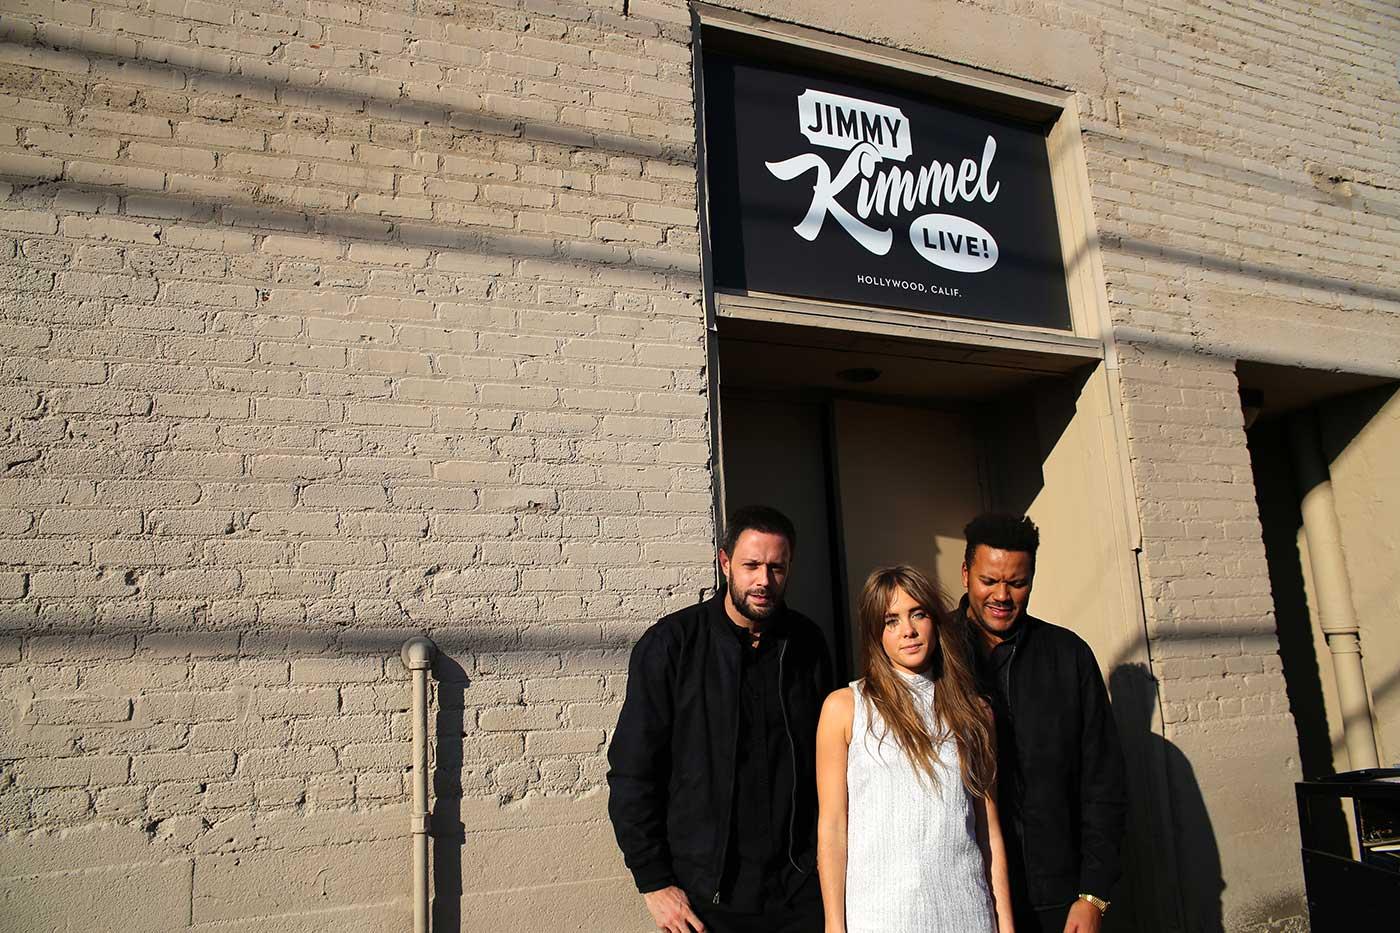 Nonono gjorde amerikansk tv-debut i ”Jimmy Kimmel live”.